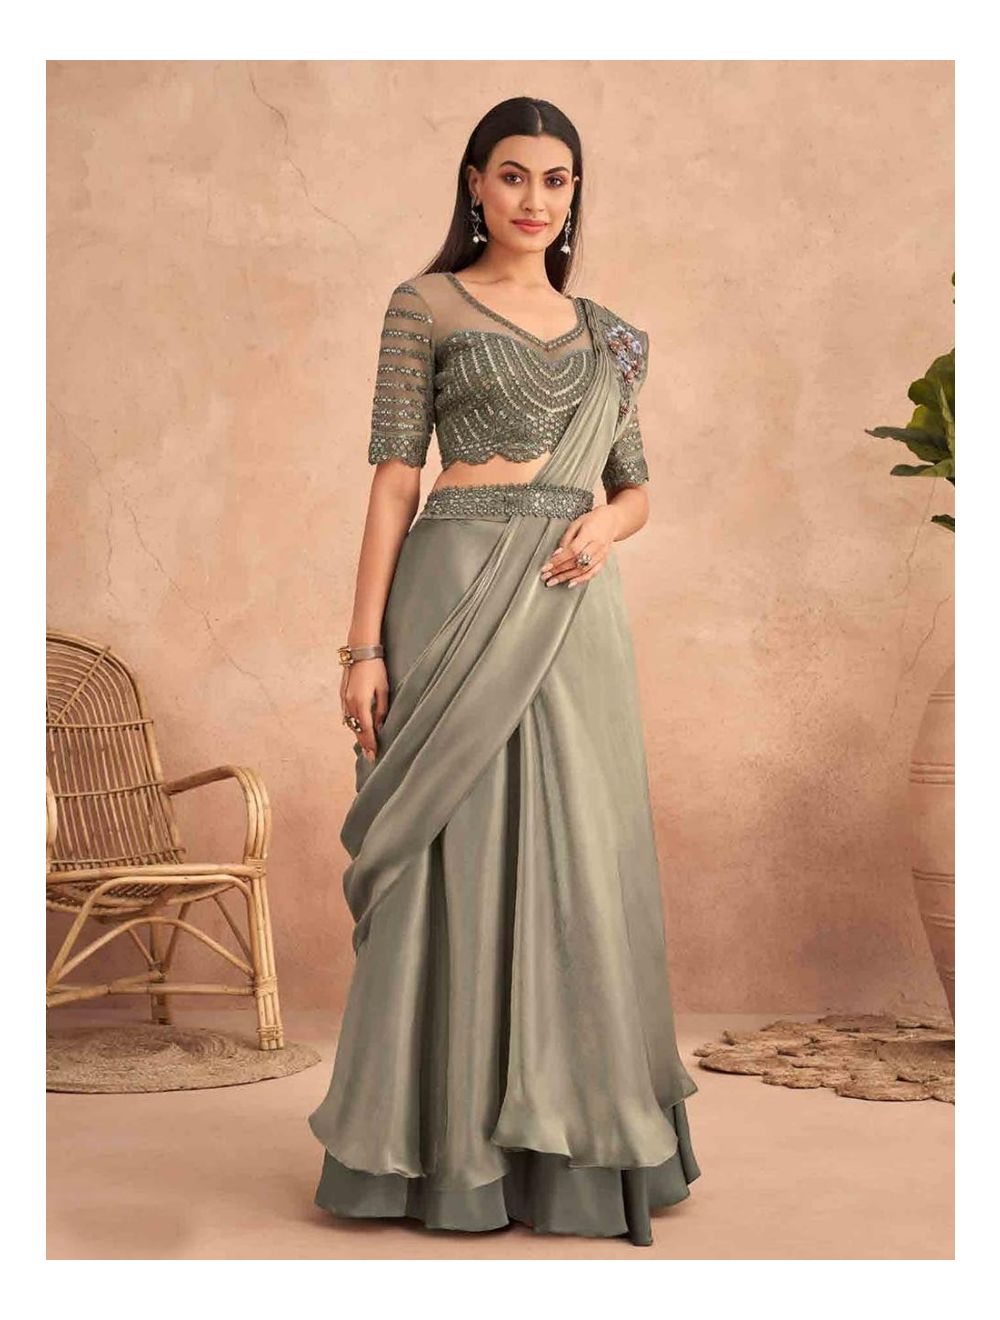 Designer Heavy Lehenga Style Saree at 3299.00 INR in Surat | Roykals Textile-cacanhphuclong.com.vn